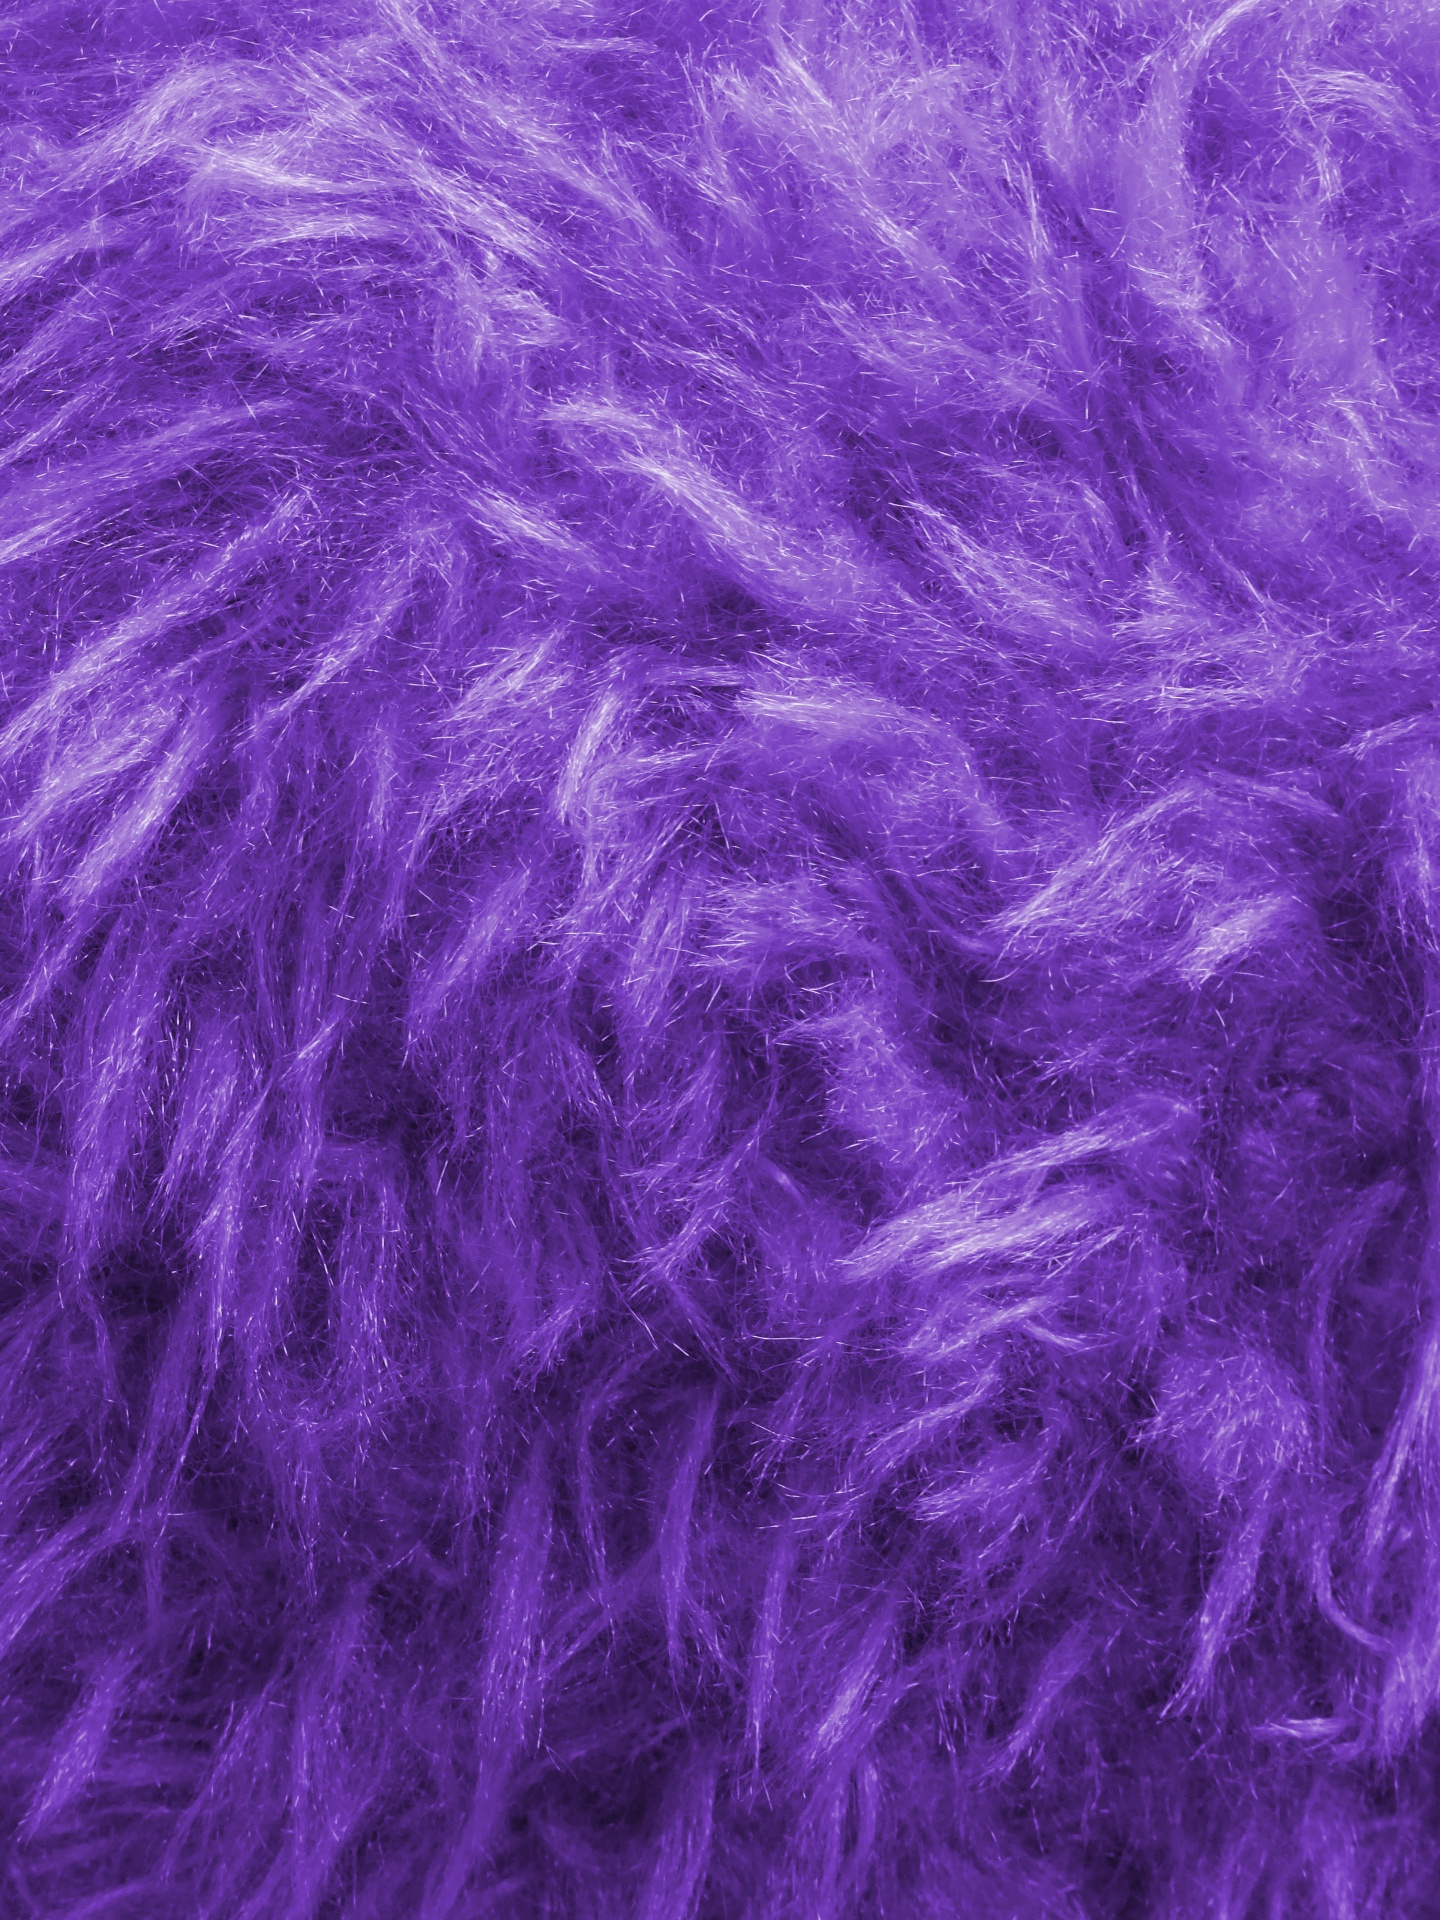 lilac purple backgrounds free photo